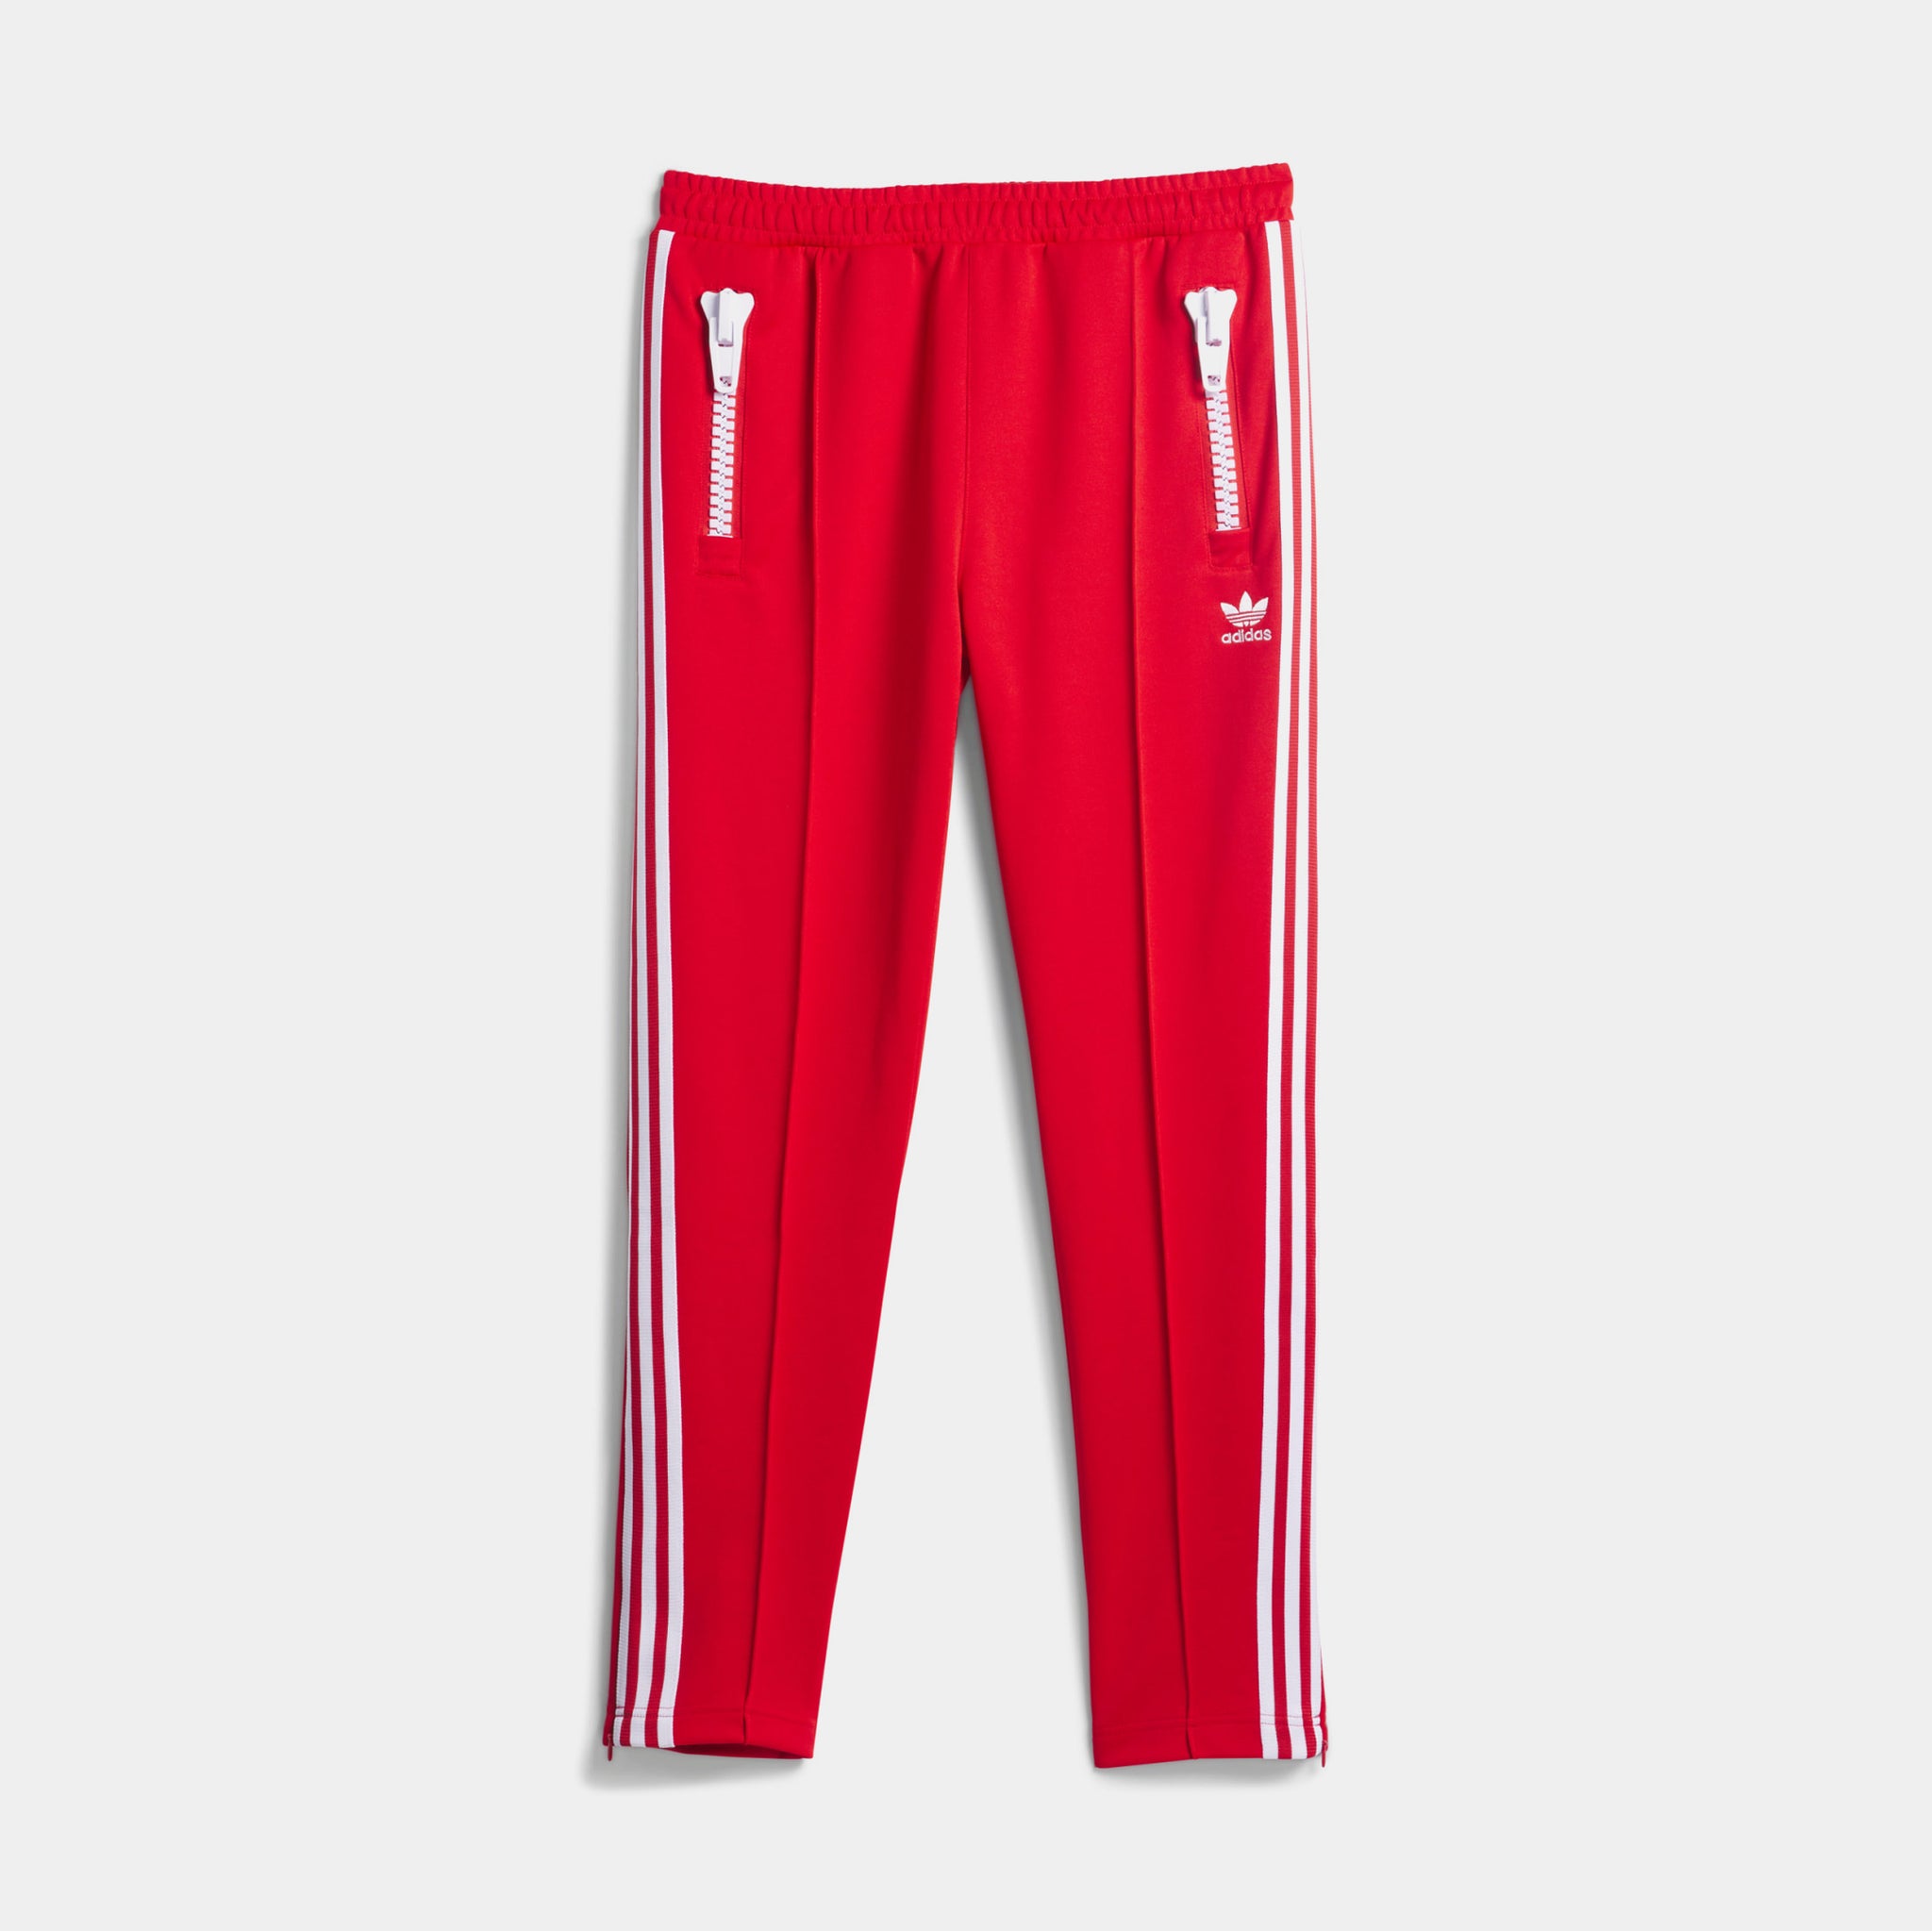 Jeremy Scott Big Zip Mens Pants (Red/White)